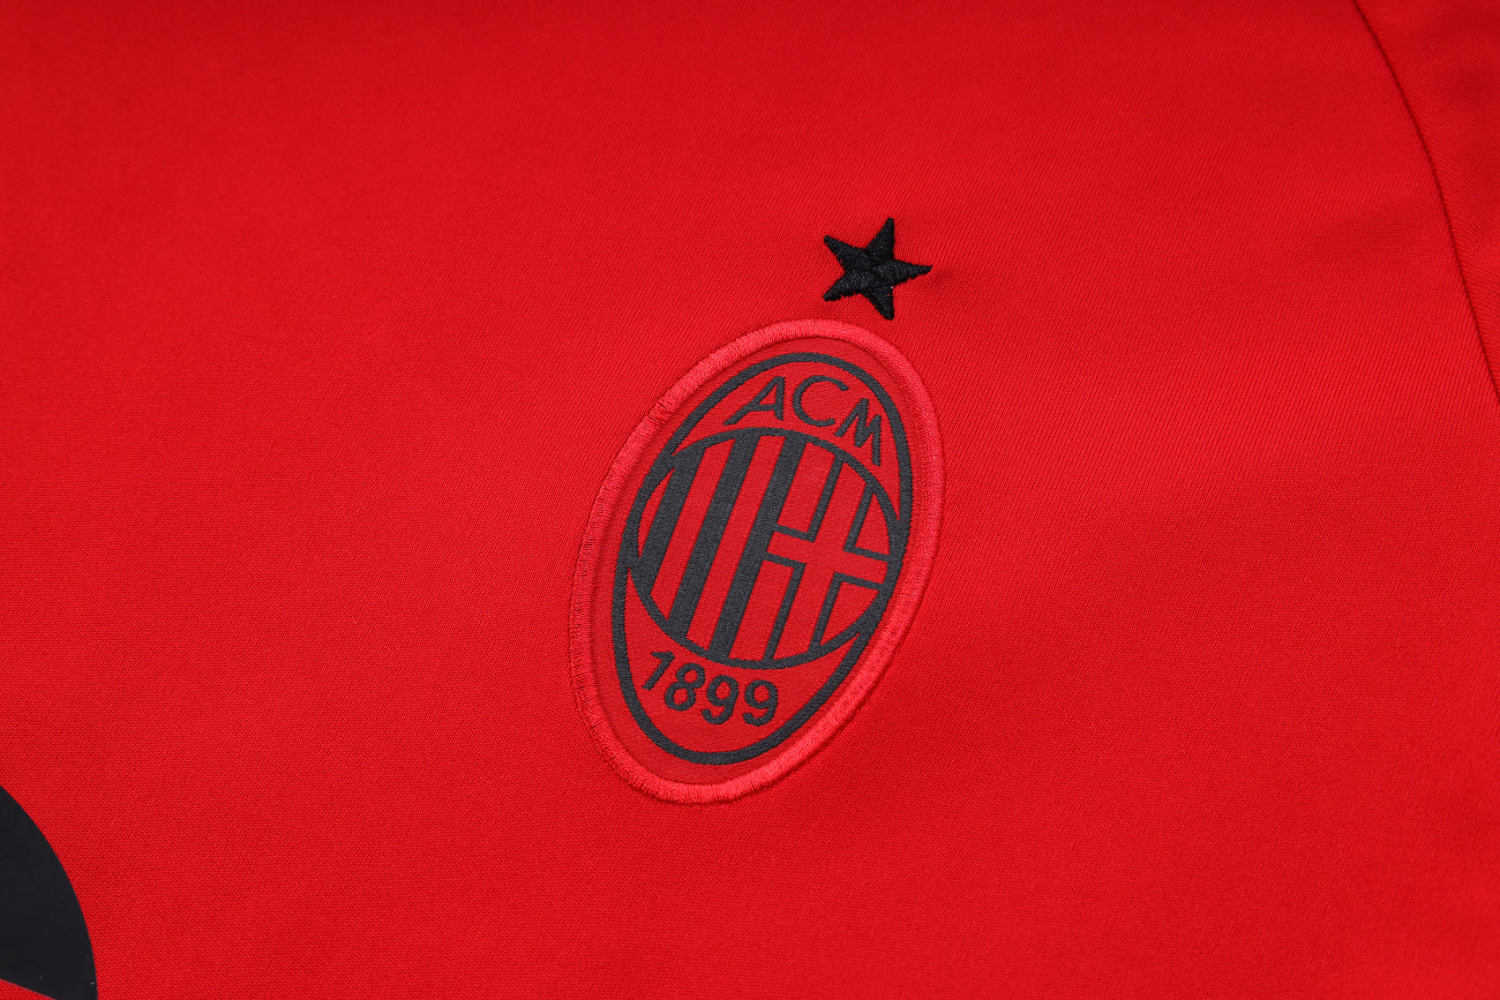 AC Milan Soccer Jersey + Short Replica Red 2022/23 Mens